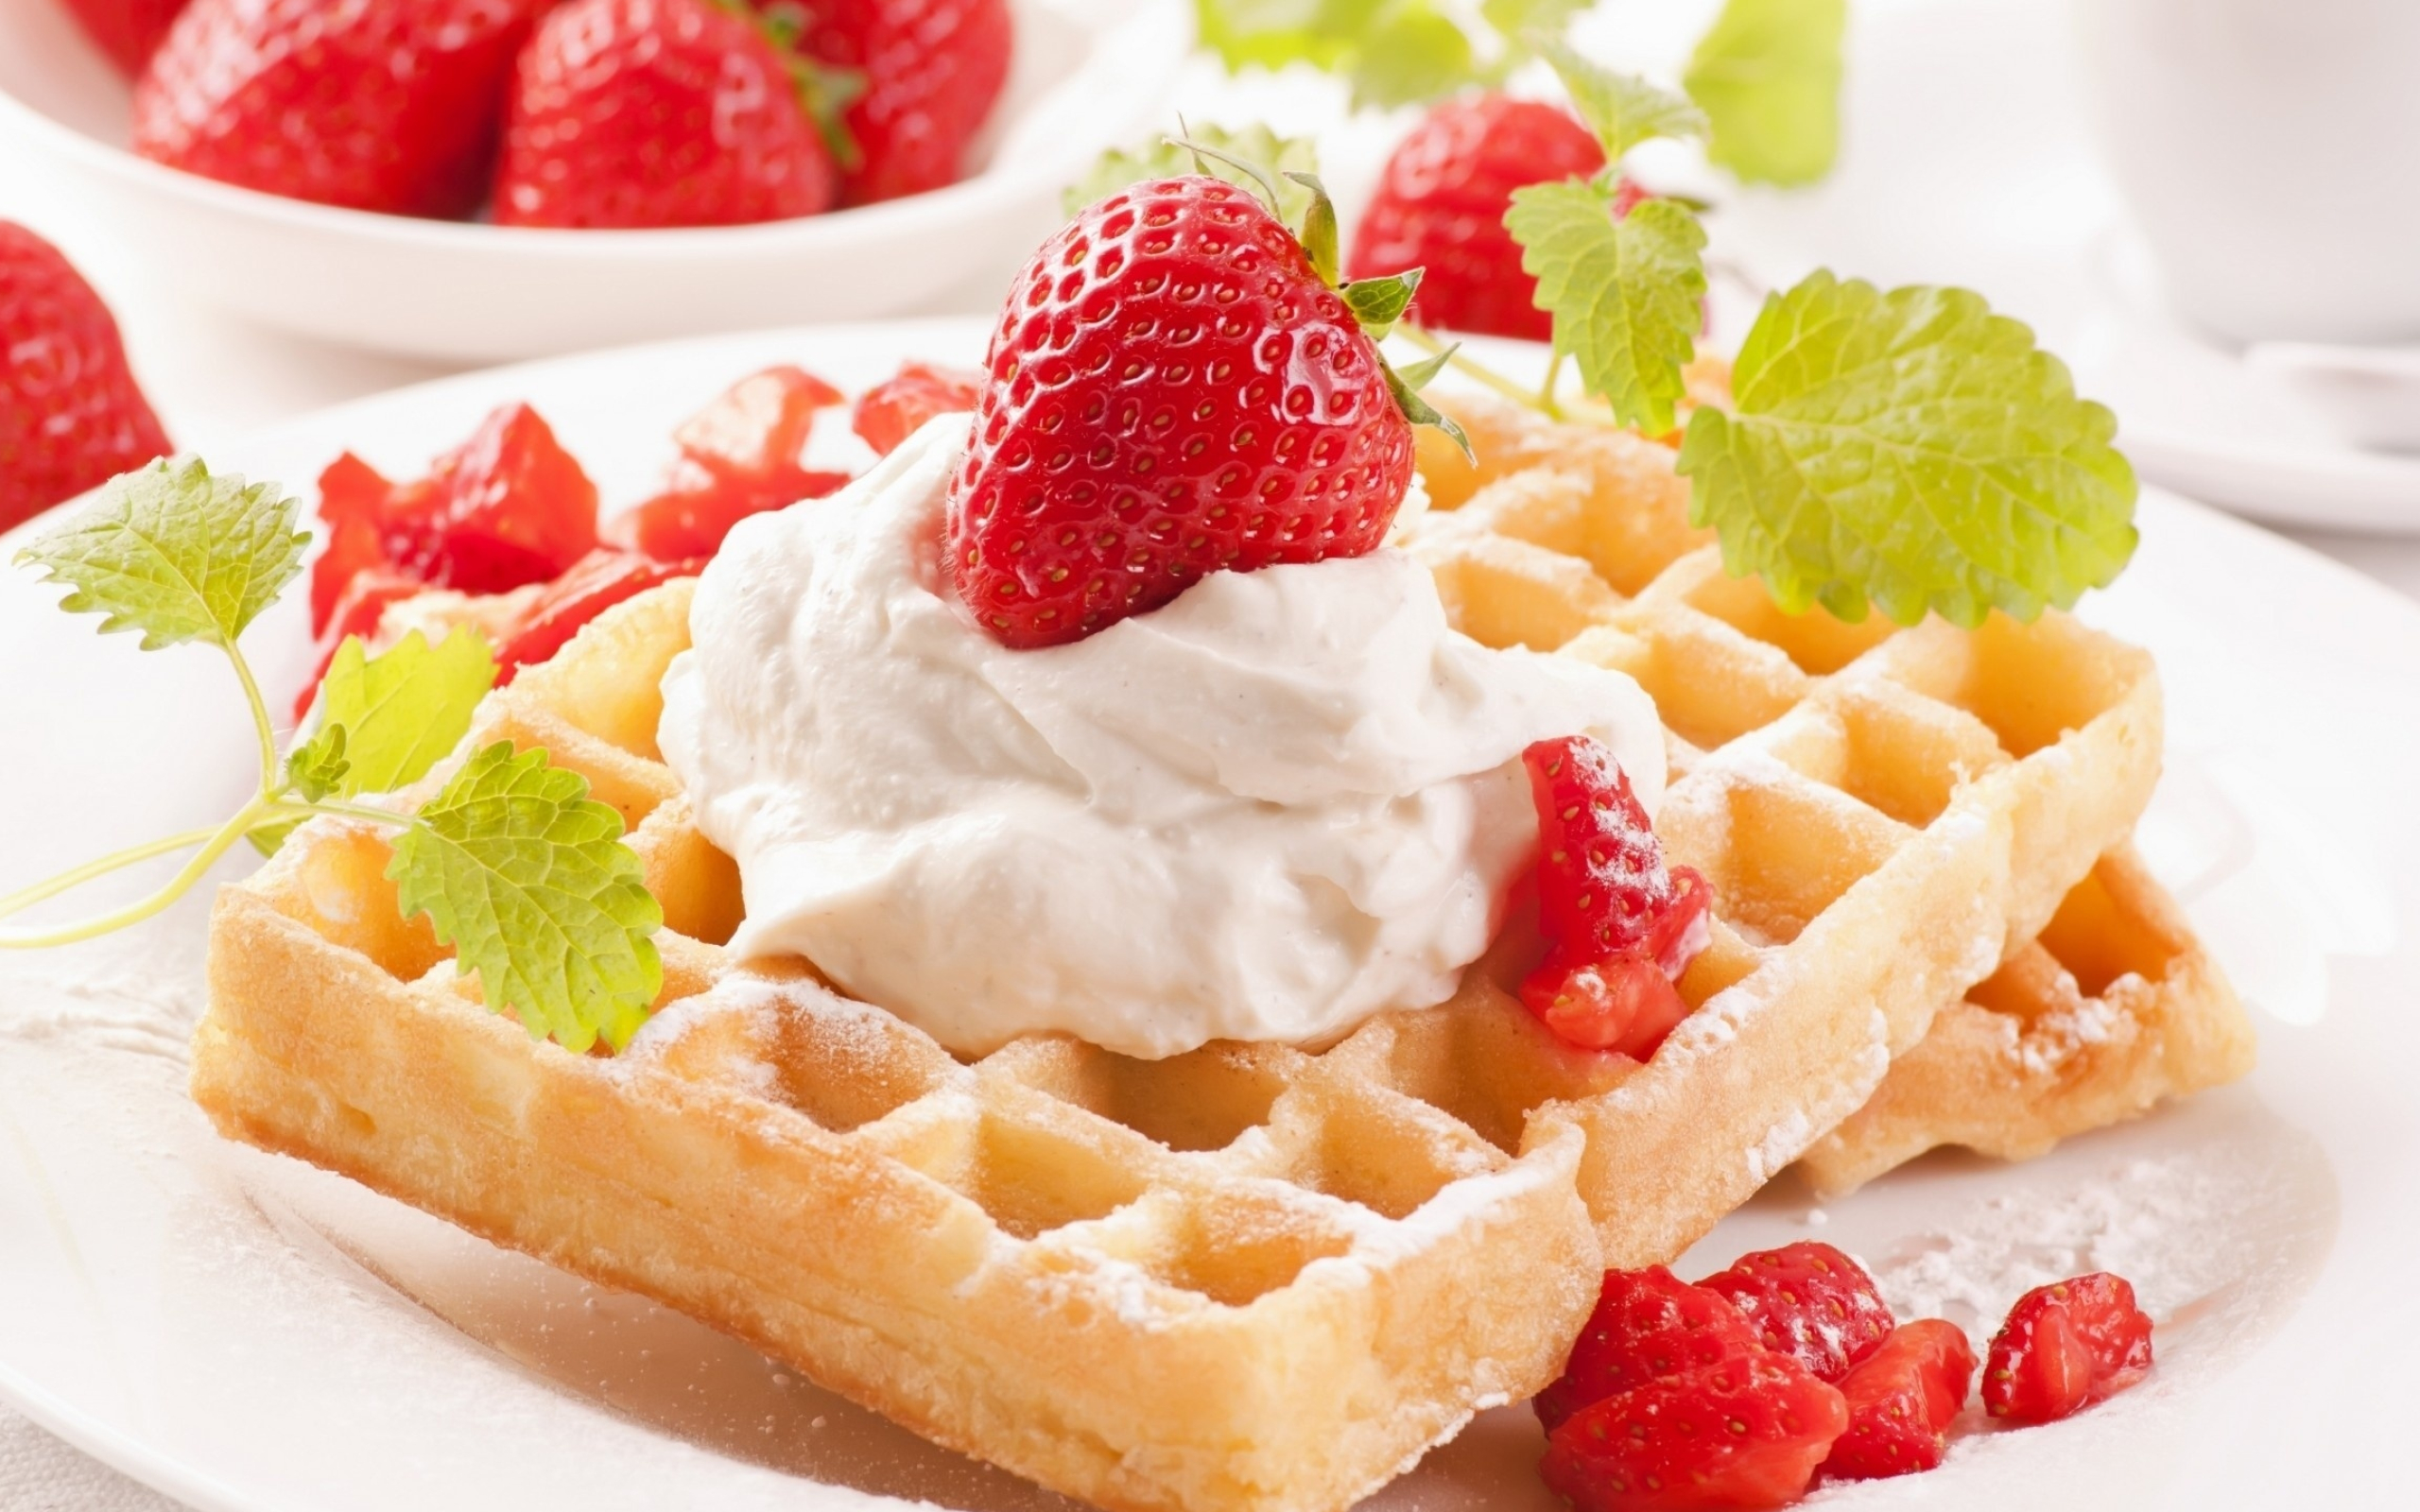 Waffle: Whipped cream, Popular dessert, Strawberries. 2560x1600 HD Wallpaper.